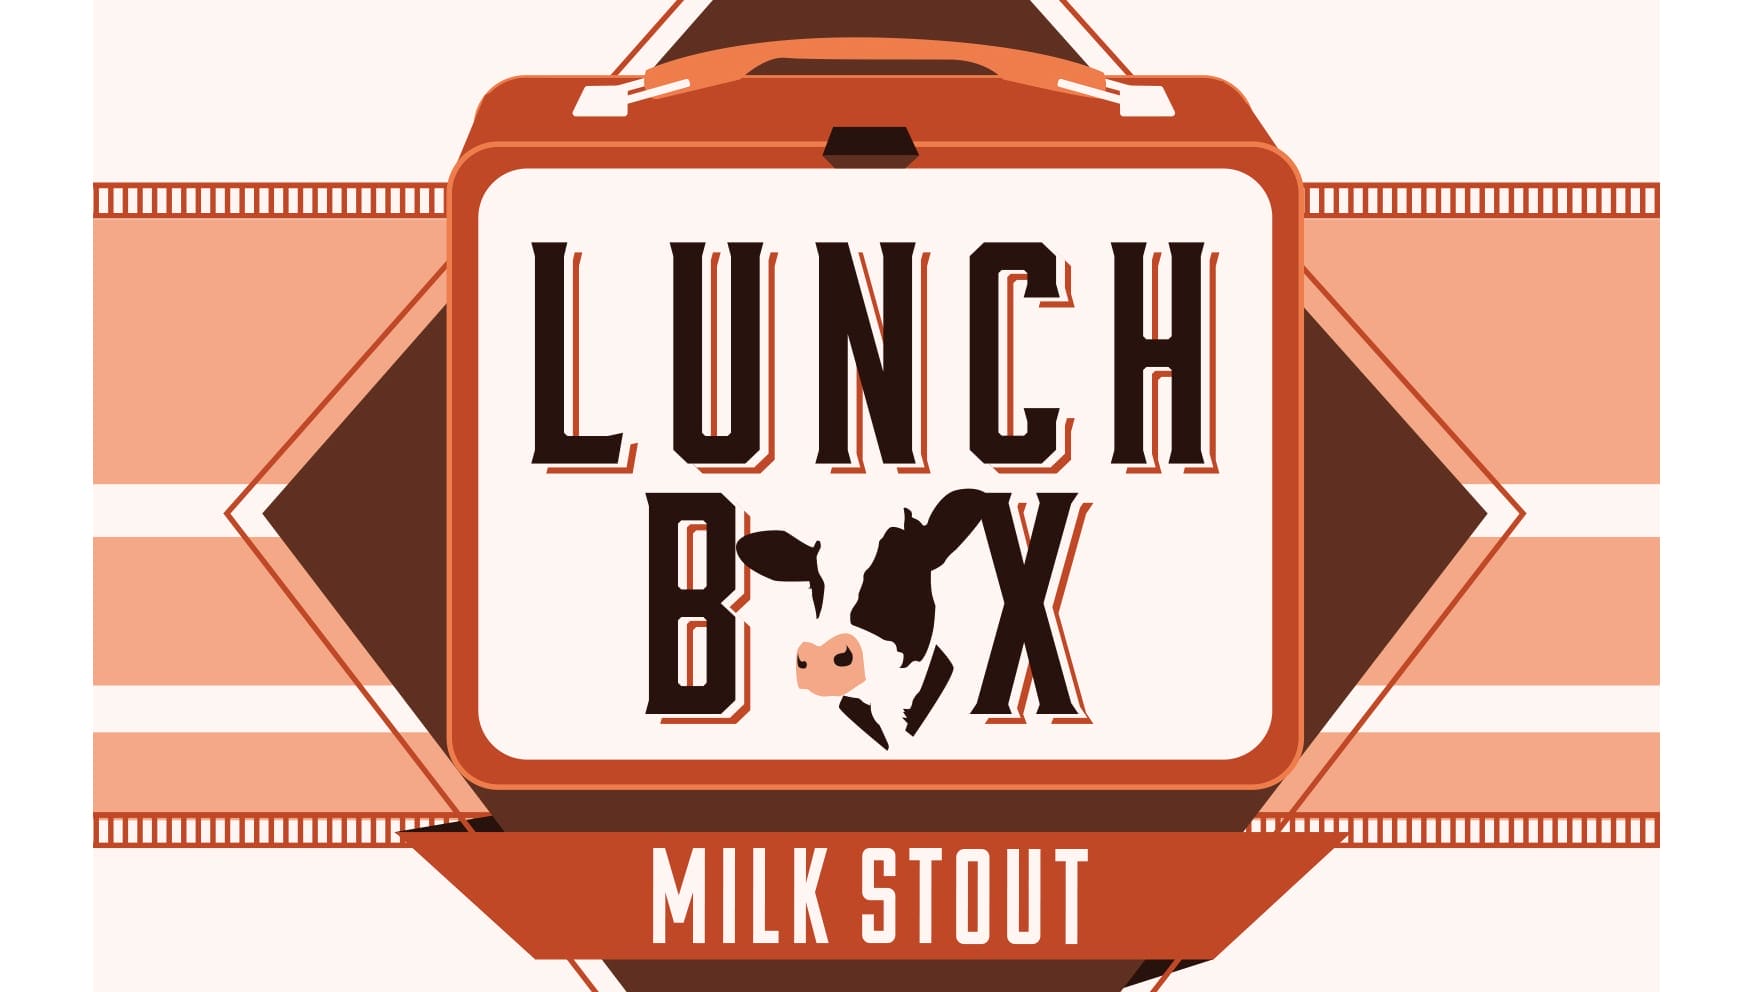 Cinder Block Brewery's Lunch Box Milk Stout